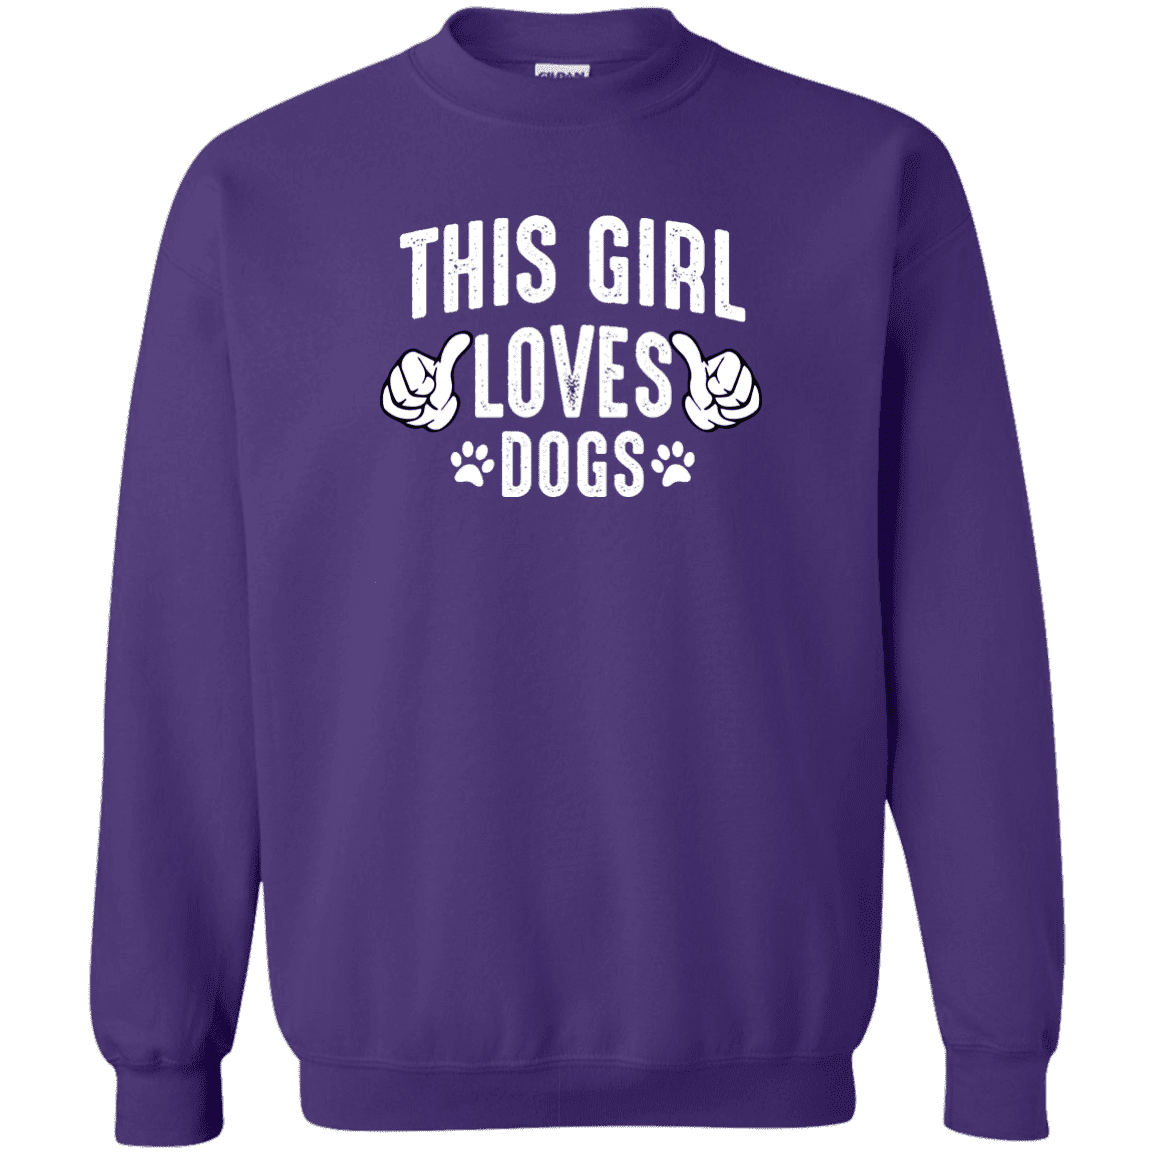 This Girl Loves Dogs - Sweatshirt.